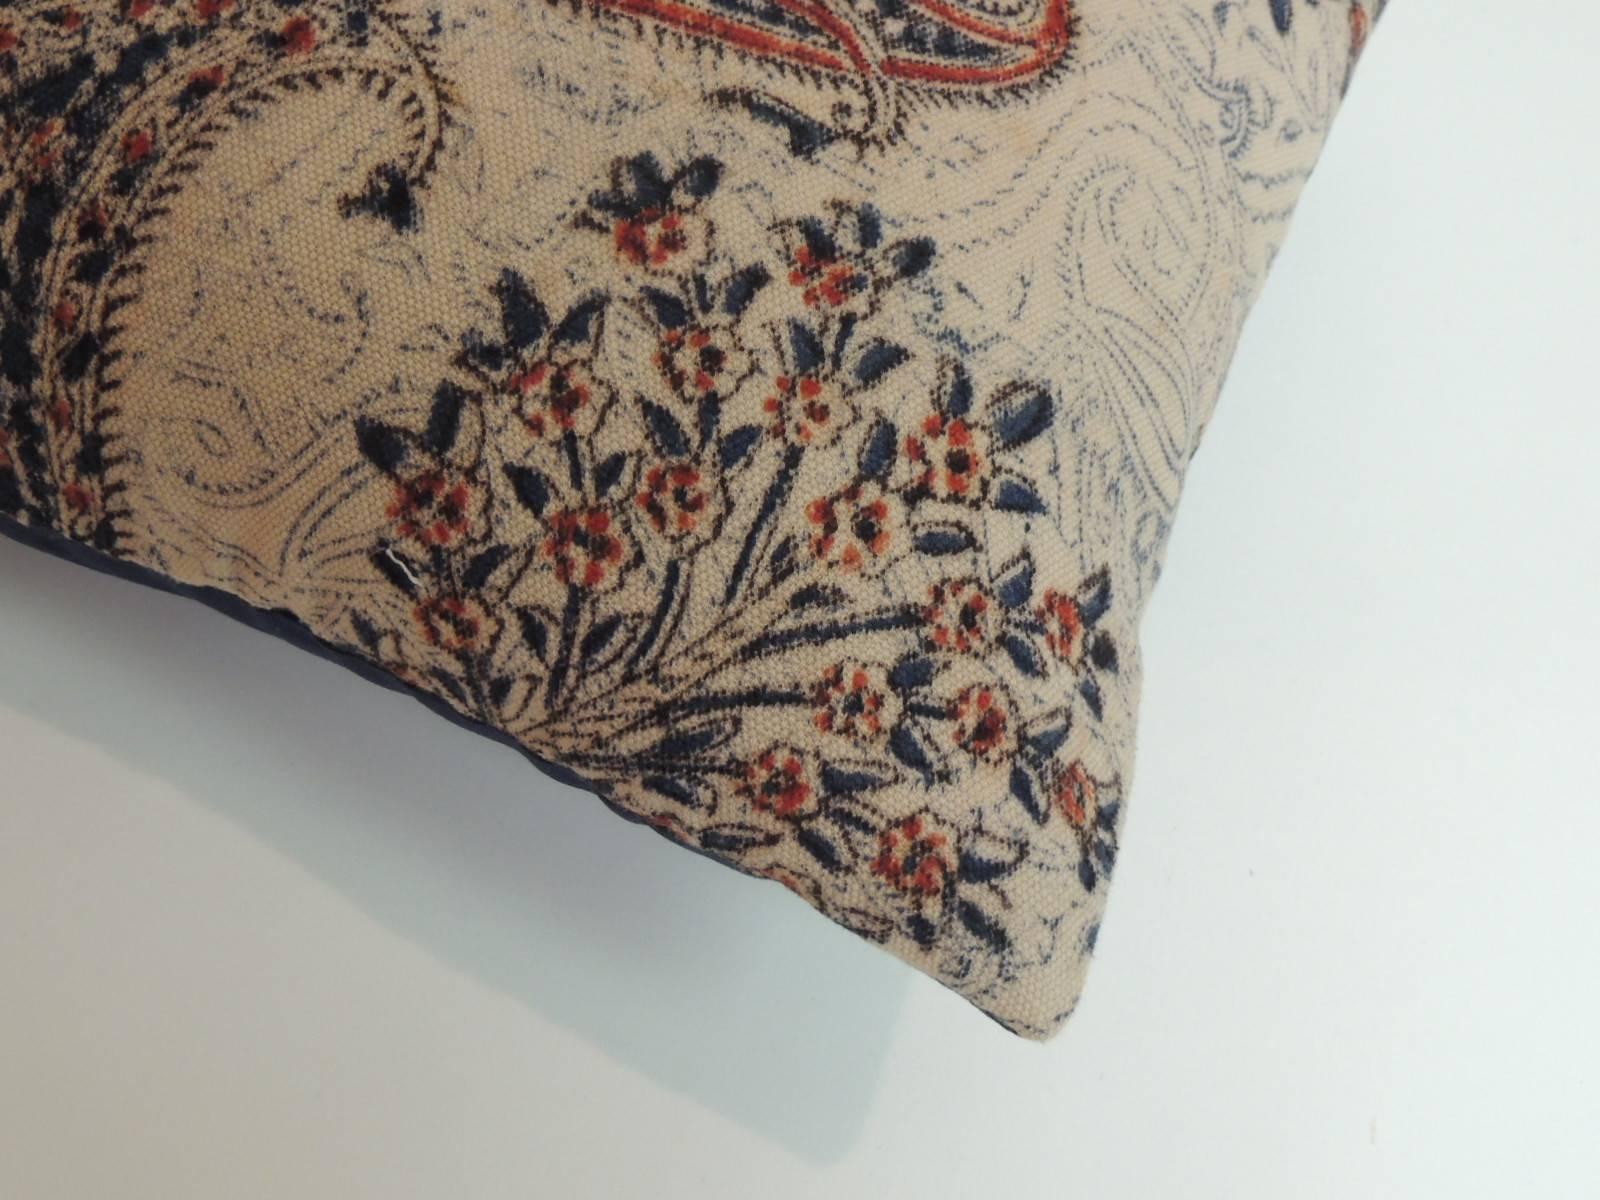 Moorish Antique Indian Kalamkari Hand-Blocked Stylized Paisley Decorative Lumbar Pillow